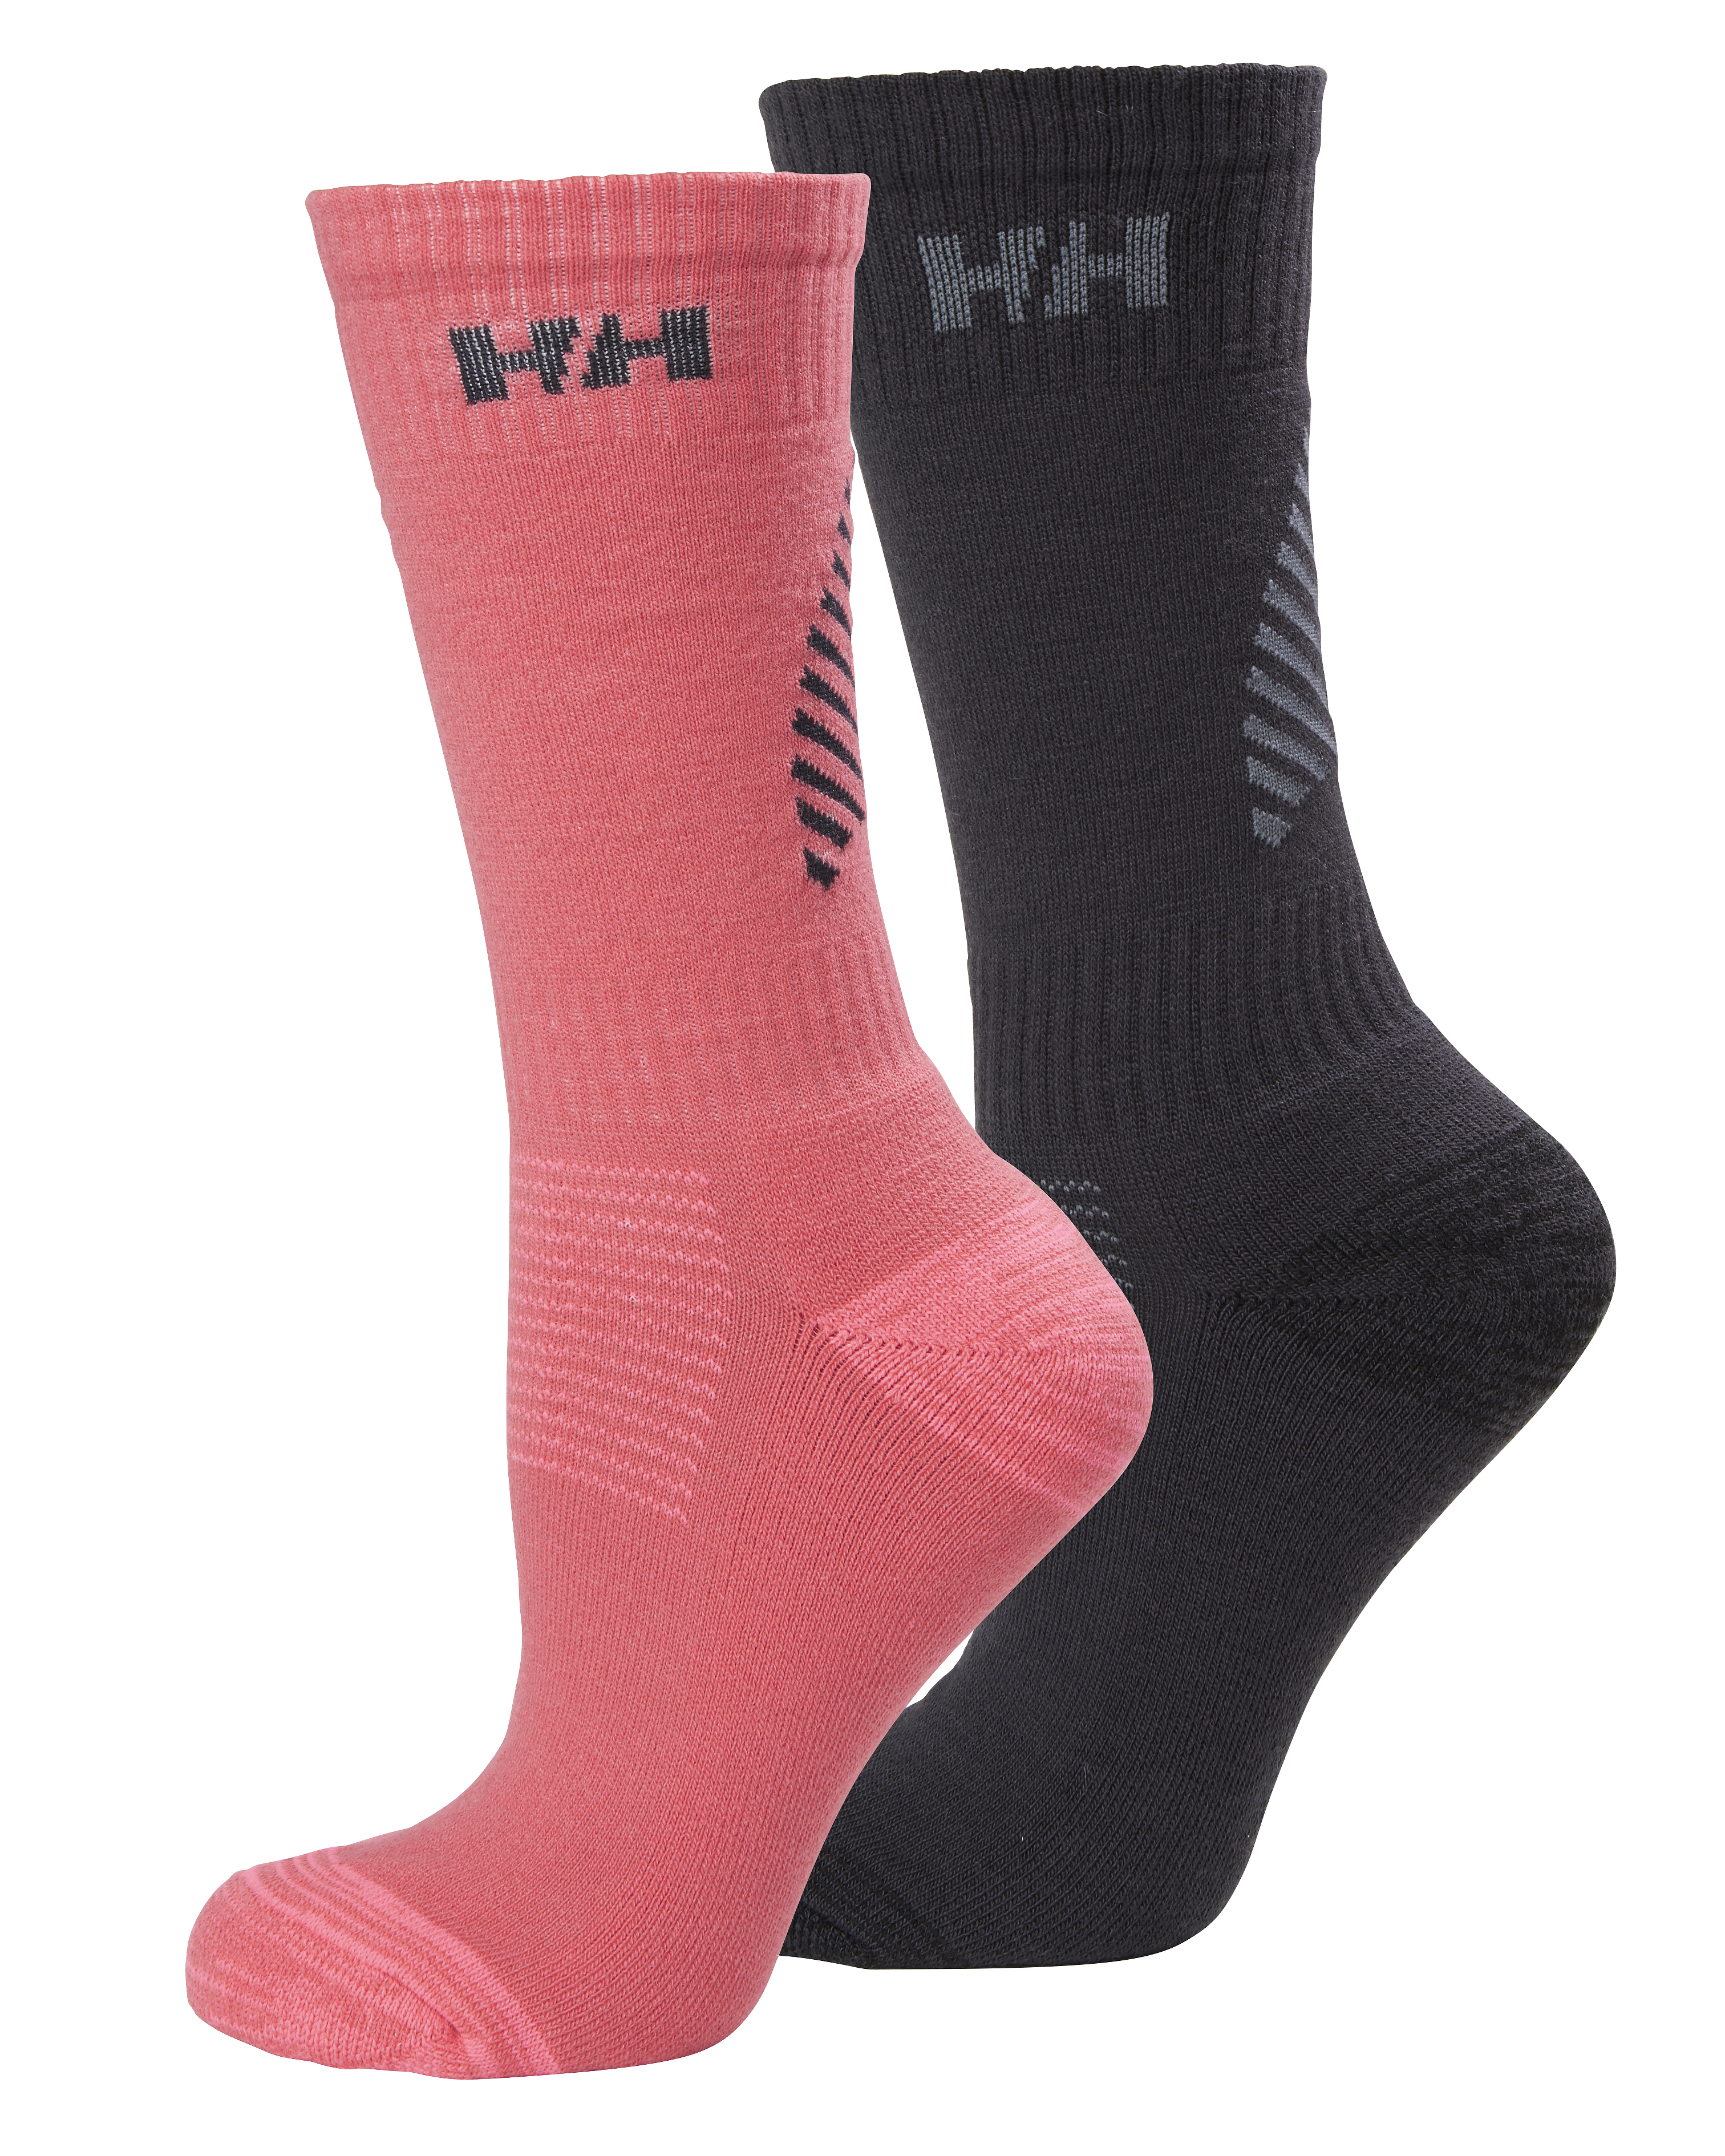 Helly Hansen Lifa Merino 2-Pack Socks - Neon Coral/Graphite